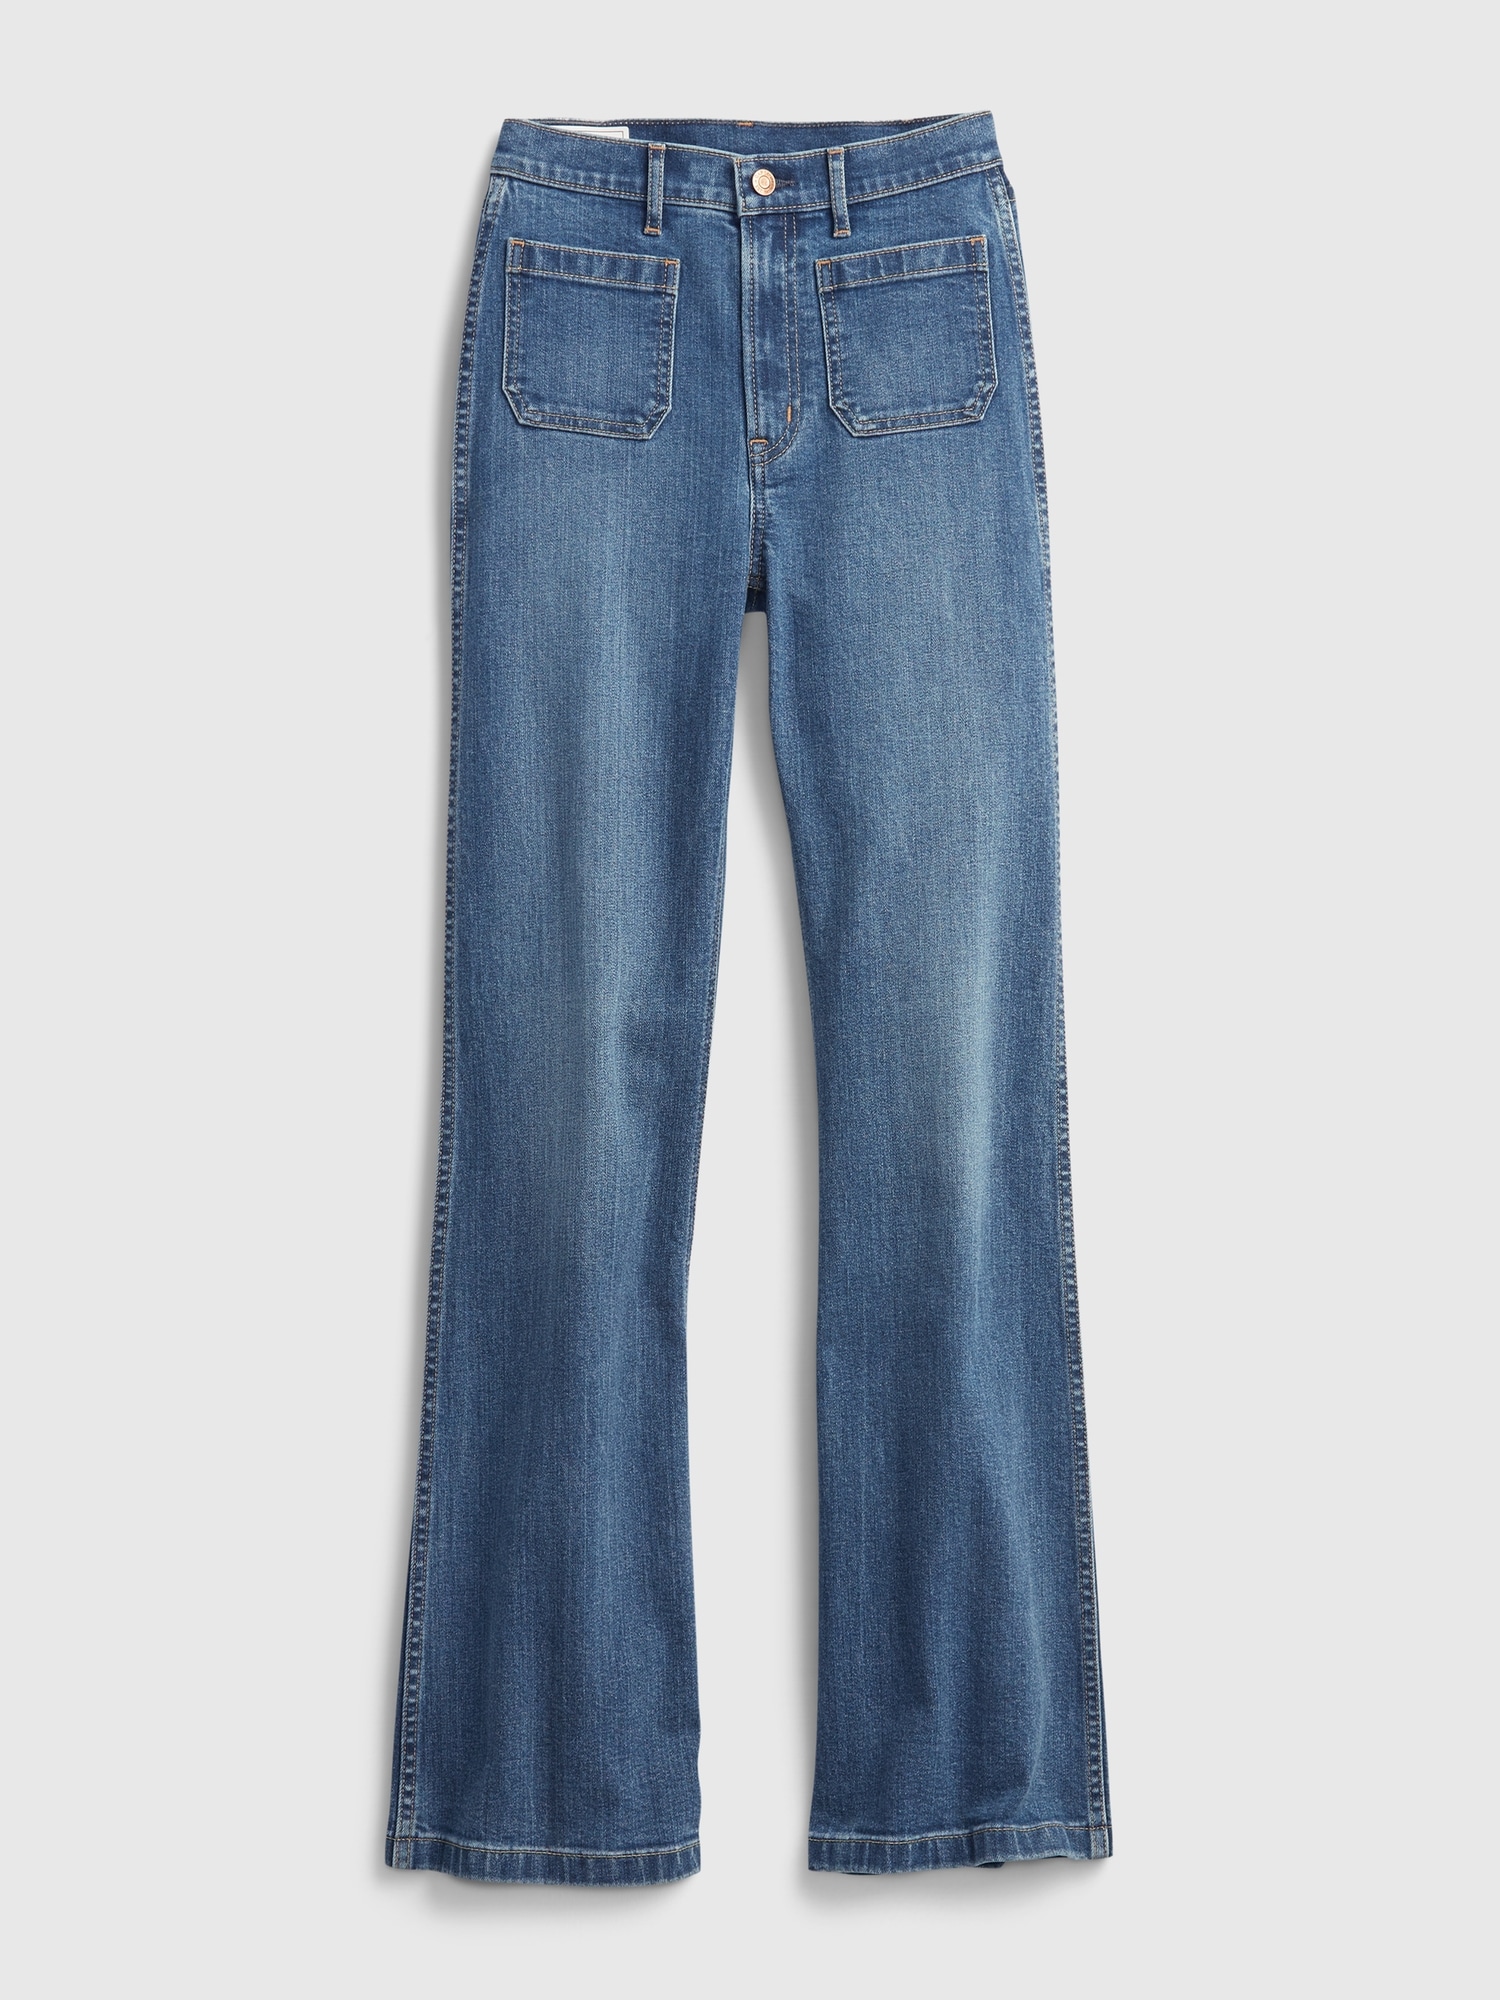 70's High Rise Flare Women's Jeans - Dark Wash